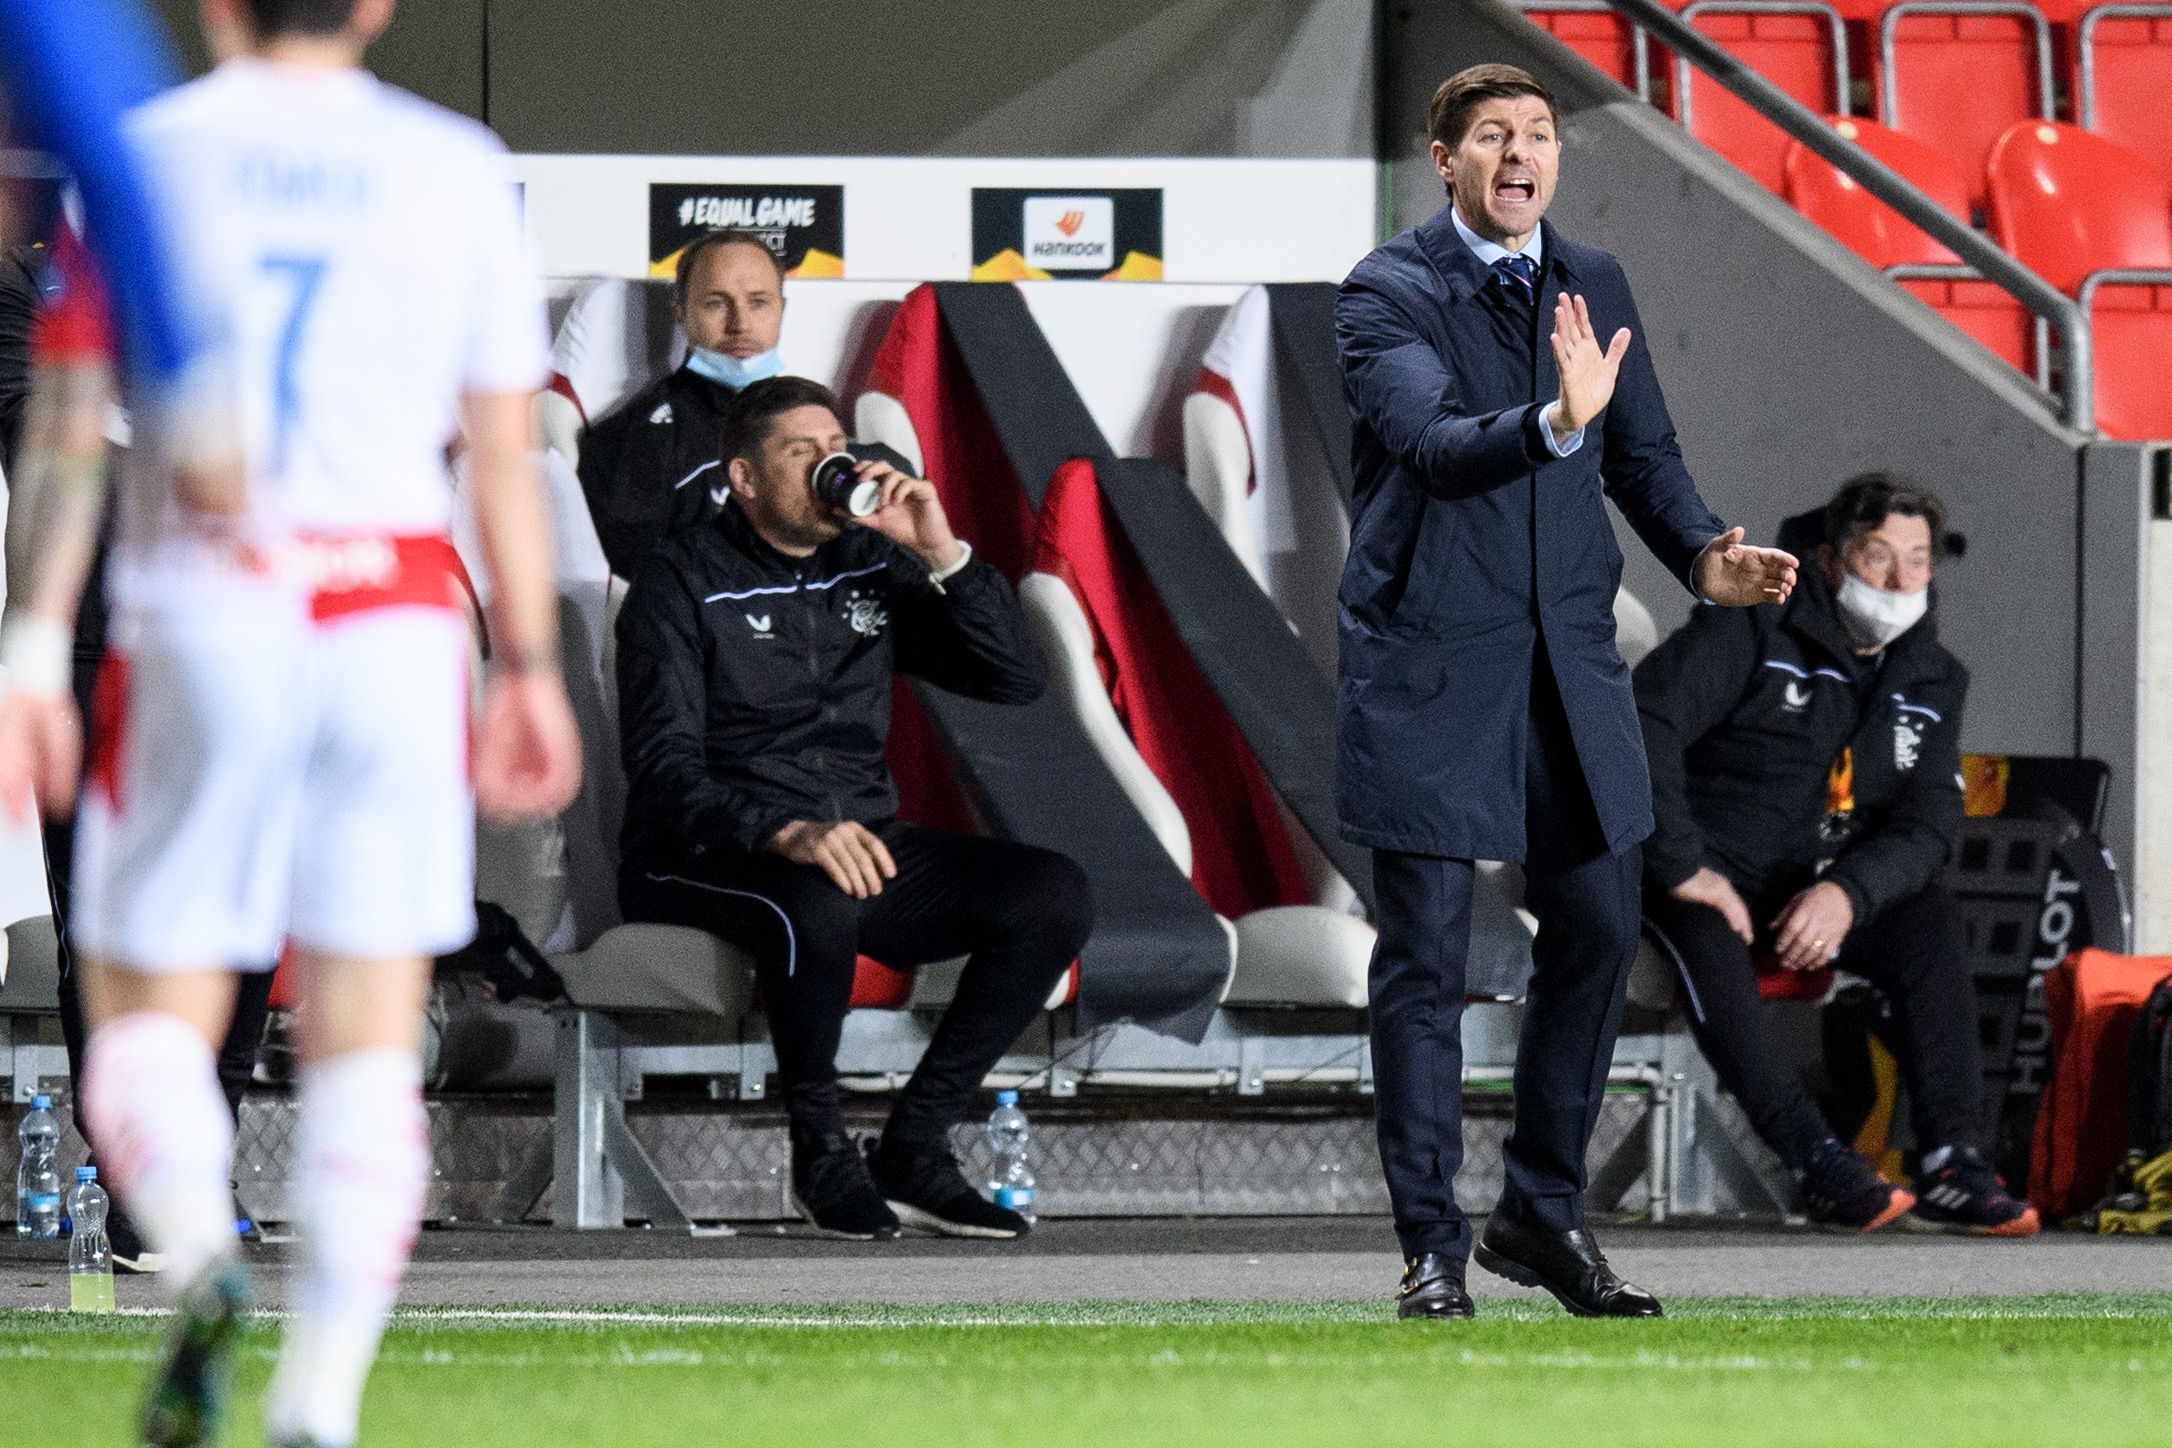 Rangers boss Steven Gerrard dreaming of Europa League glory ahead of Slavia showdown at Ibrox